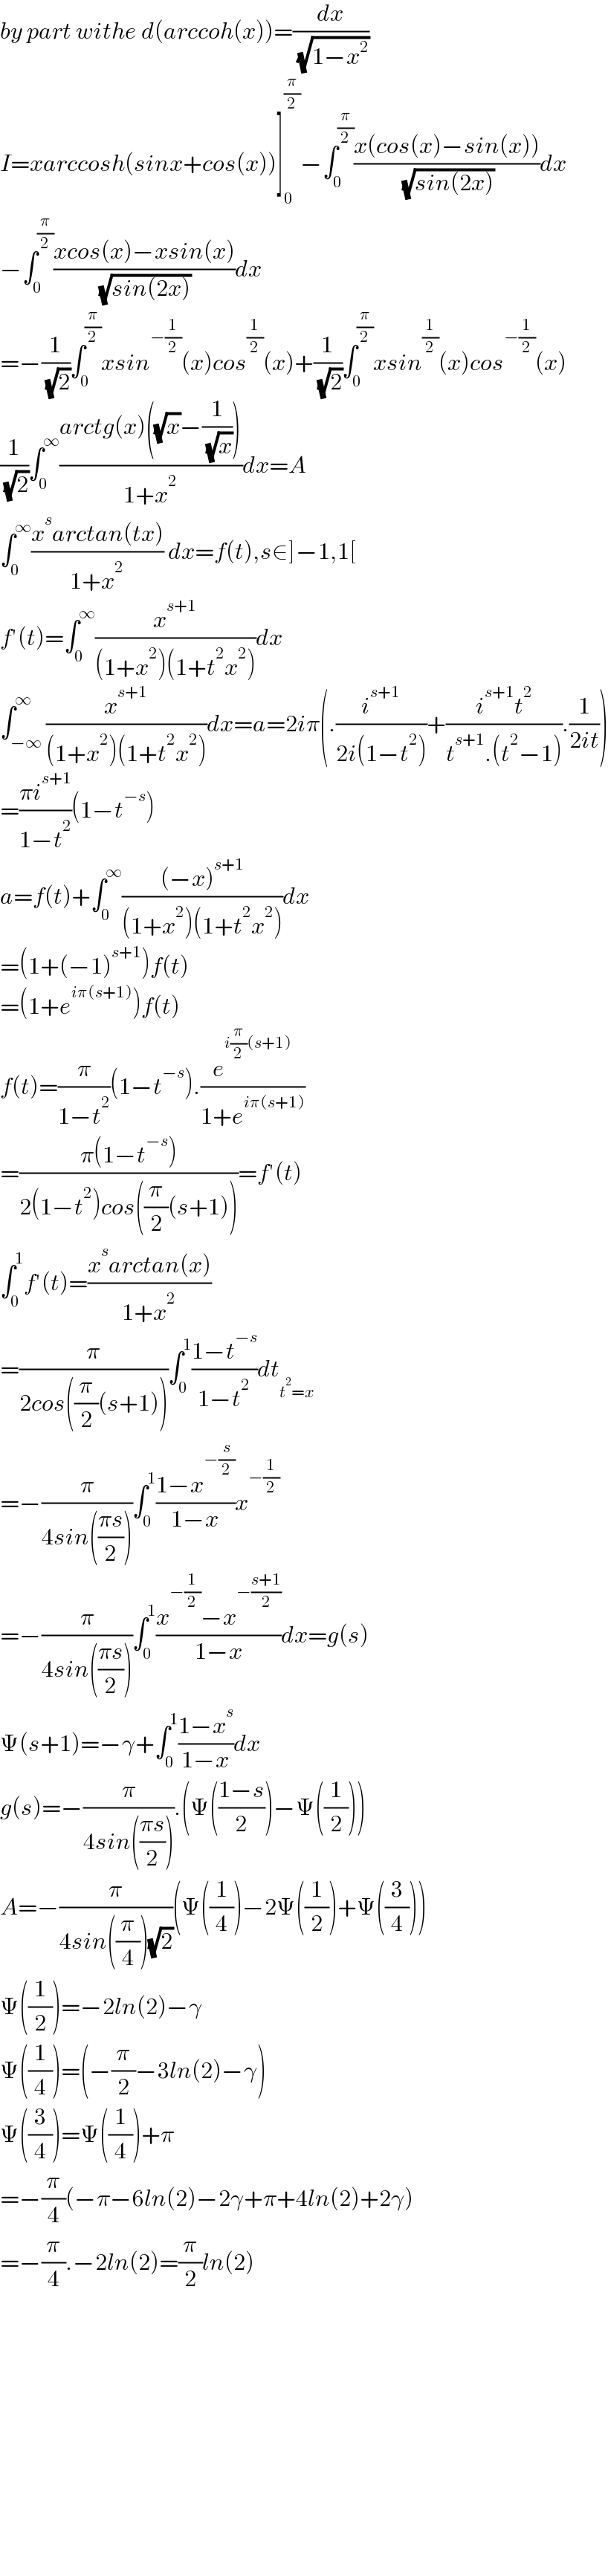 by part withe d(arccoh(x))=(dx/( (√(1−x^2 ))))  I=xarccosh(sinx+cos(x))]_0 ^(π/2) −∫_0 ^(π/2) ((x(cos(x)−sin(x)))/( (√(sin(2x)))))dx  −∫_0 ^(π/2) ((xcos(x)−xsin(x))/( (√(sin(2x)))))dx  =−(1/( (√2)))∫_0 ^(π/2) xsin^(−(1/2)) (x)cos^(1/2) (x)+(1/( (√2)))∫_0 ^(π/2) xsin^(1/2) (x)cos^(−(1/2)) (x)  (1/( (√2)))∫_0 ^∞ ((arctg(x)((√x)−(1/( (√x)))))/(1+x^2 ))dx=A  ∫_0 ^∞ ((x^s arctan(tx))/(1+x^2 )) dx=f(t),s∈]−1,1[  f′(t)=∫_0 ^∞ (x^(s+1) /((1+x^2 )(1+t^2 x^2 )))dx  ∫_(−∞) ^∞ (x^(s+1) /((1+x^2 )(1+t^2 x^2 )))dx=a=2iπ(.(i^(s+1) /(2i(1−t^2 )))+((i^(s+1) t^2 )/(t^(s+1) .(t^2 −1))).(1/(2it)))  =((πi^(s+1) )/(1−t^2 ))(1−t^(−s) )  a=f(t)+∫_0 ^∞ (((−x)^(s+1) )/((1+x^2 )(1+t^2 x^2 )))dx  =(1+(−1)^(s+1) )f(t)  =(1+e^(iπ(s+1)) )f(t)  f(t)=(π/(1−t^2 ))(1−t^(−s) ).(e^(i(π/2)(s+1)) /(1+e^(iπ(s+1)) ))  =((π(1−t^(−s) ))/(2(1−t^2 )cos((π/2)(s+1))))=f′(t)  ∫_0 ^1 f′(t)=((x^s arctan(x))/(1+x^2 ))  =(π/(2cos((π/2)(s+1))))∫_0 ^1 ((1−t^(−s) )/(1−t^2 ))dt_(t^2 =x)   =−(π/(4sin(((πs)/2))))∫_0 ^1 ((1−x^(−(s/2)) )/(1−x))x^(−(1/2))   =−(π/(4sin(((πs)/2))))∫_0 ^1 ((x^(−(1/2)) −x^(−((s+1)/2)) )/(1−x))dx=g(s)  Ψ(s+1)=−γ+∫_0 ^1 ((1−x^s )/(1−x))dx  g(s)=−(π/(4sin(((πs)/2)))).(Ψ(((1−s)/2))−Ψ((1/2)))  A=−(π/(4sin((π/4))(√2)))(Ψ((1/4))−2Ψ((1/2))+Ψ((3/4)))  Ψ((1/2))=−2ln(2)−γ  Ψ((1/4))=(−(π/2)−3ln(2)−γ)  Ψ((3/4))=Ψ((1/4))+π  =−(π/4)(−π−6ln(2)−2γ+π+4ln(2)+2γ)  =−(π/4).−2ln(2)=(π/2)ln(2)                    